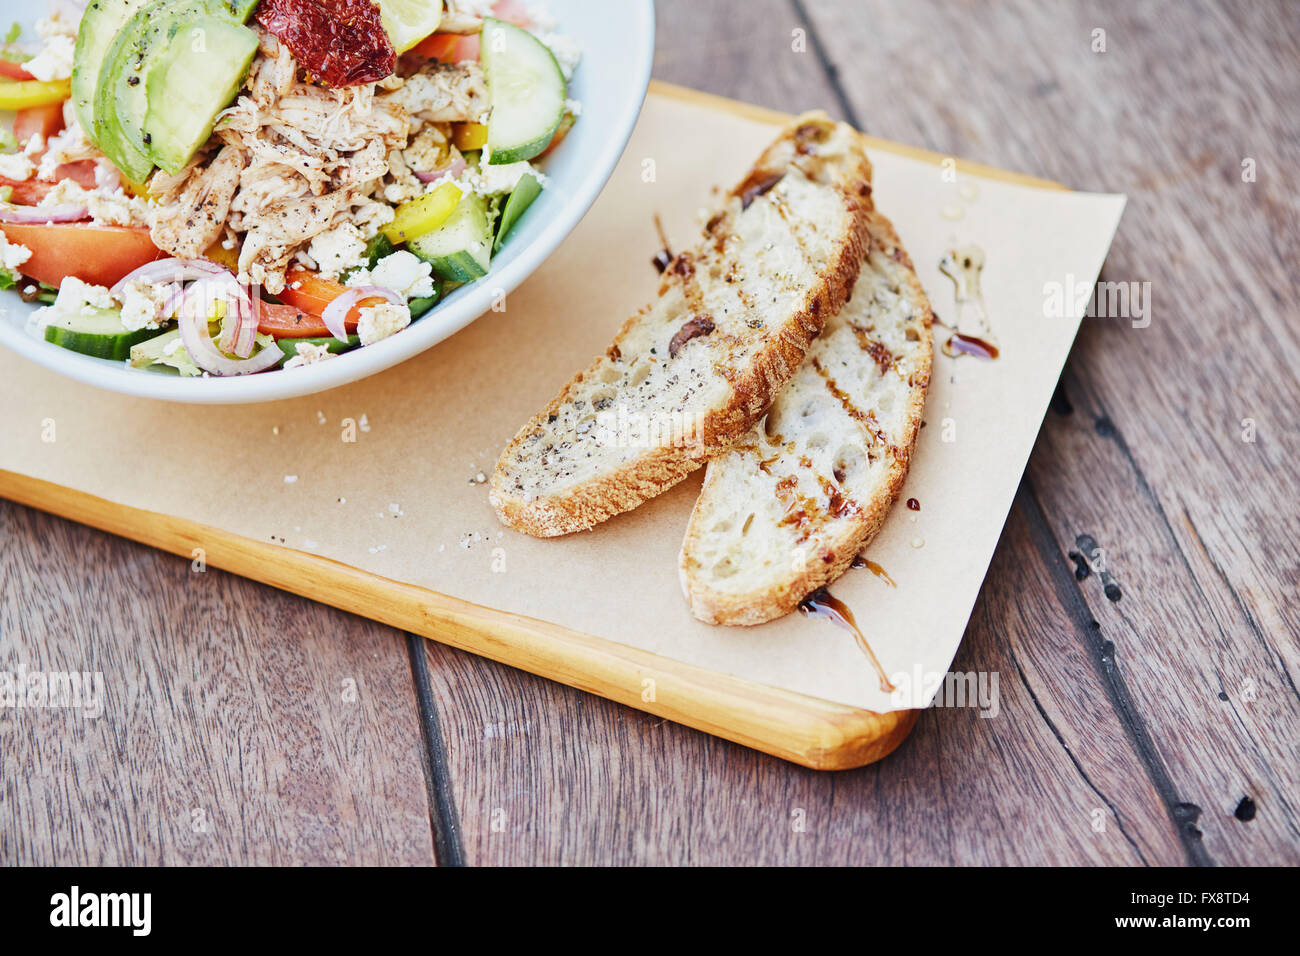 Freshly sliced baguette alongside a fresh salad on wooden board Stock Photo